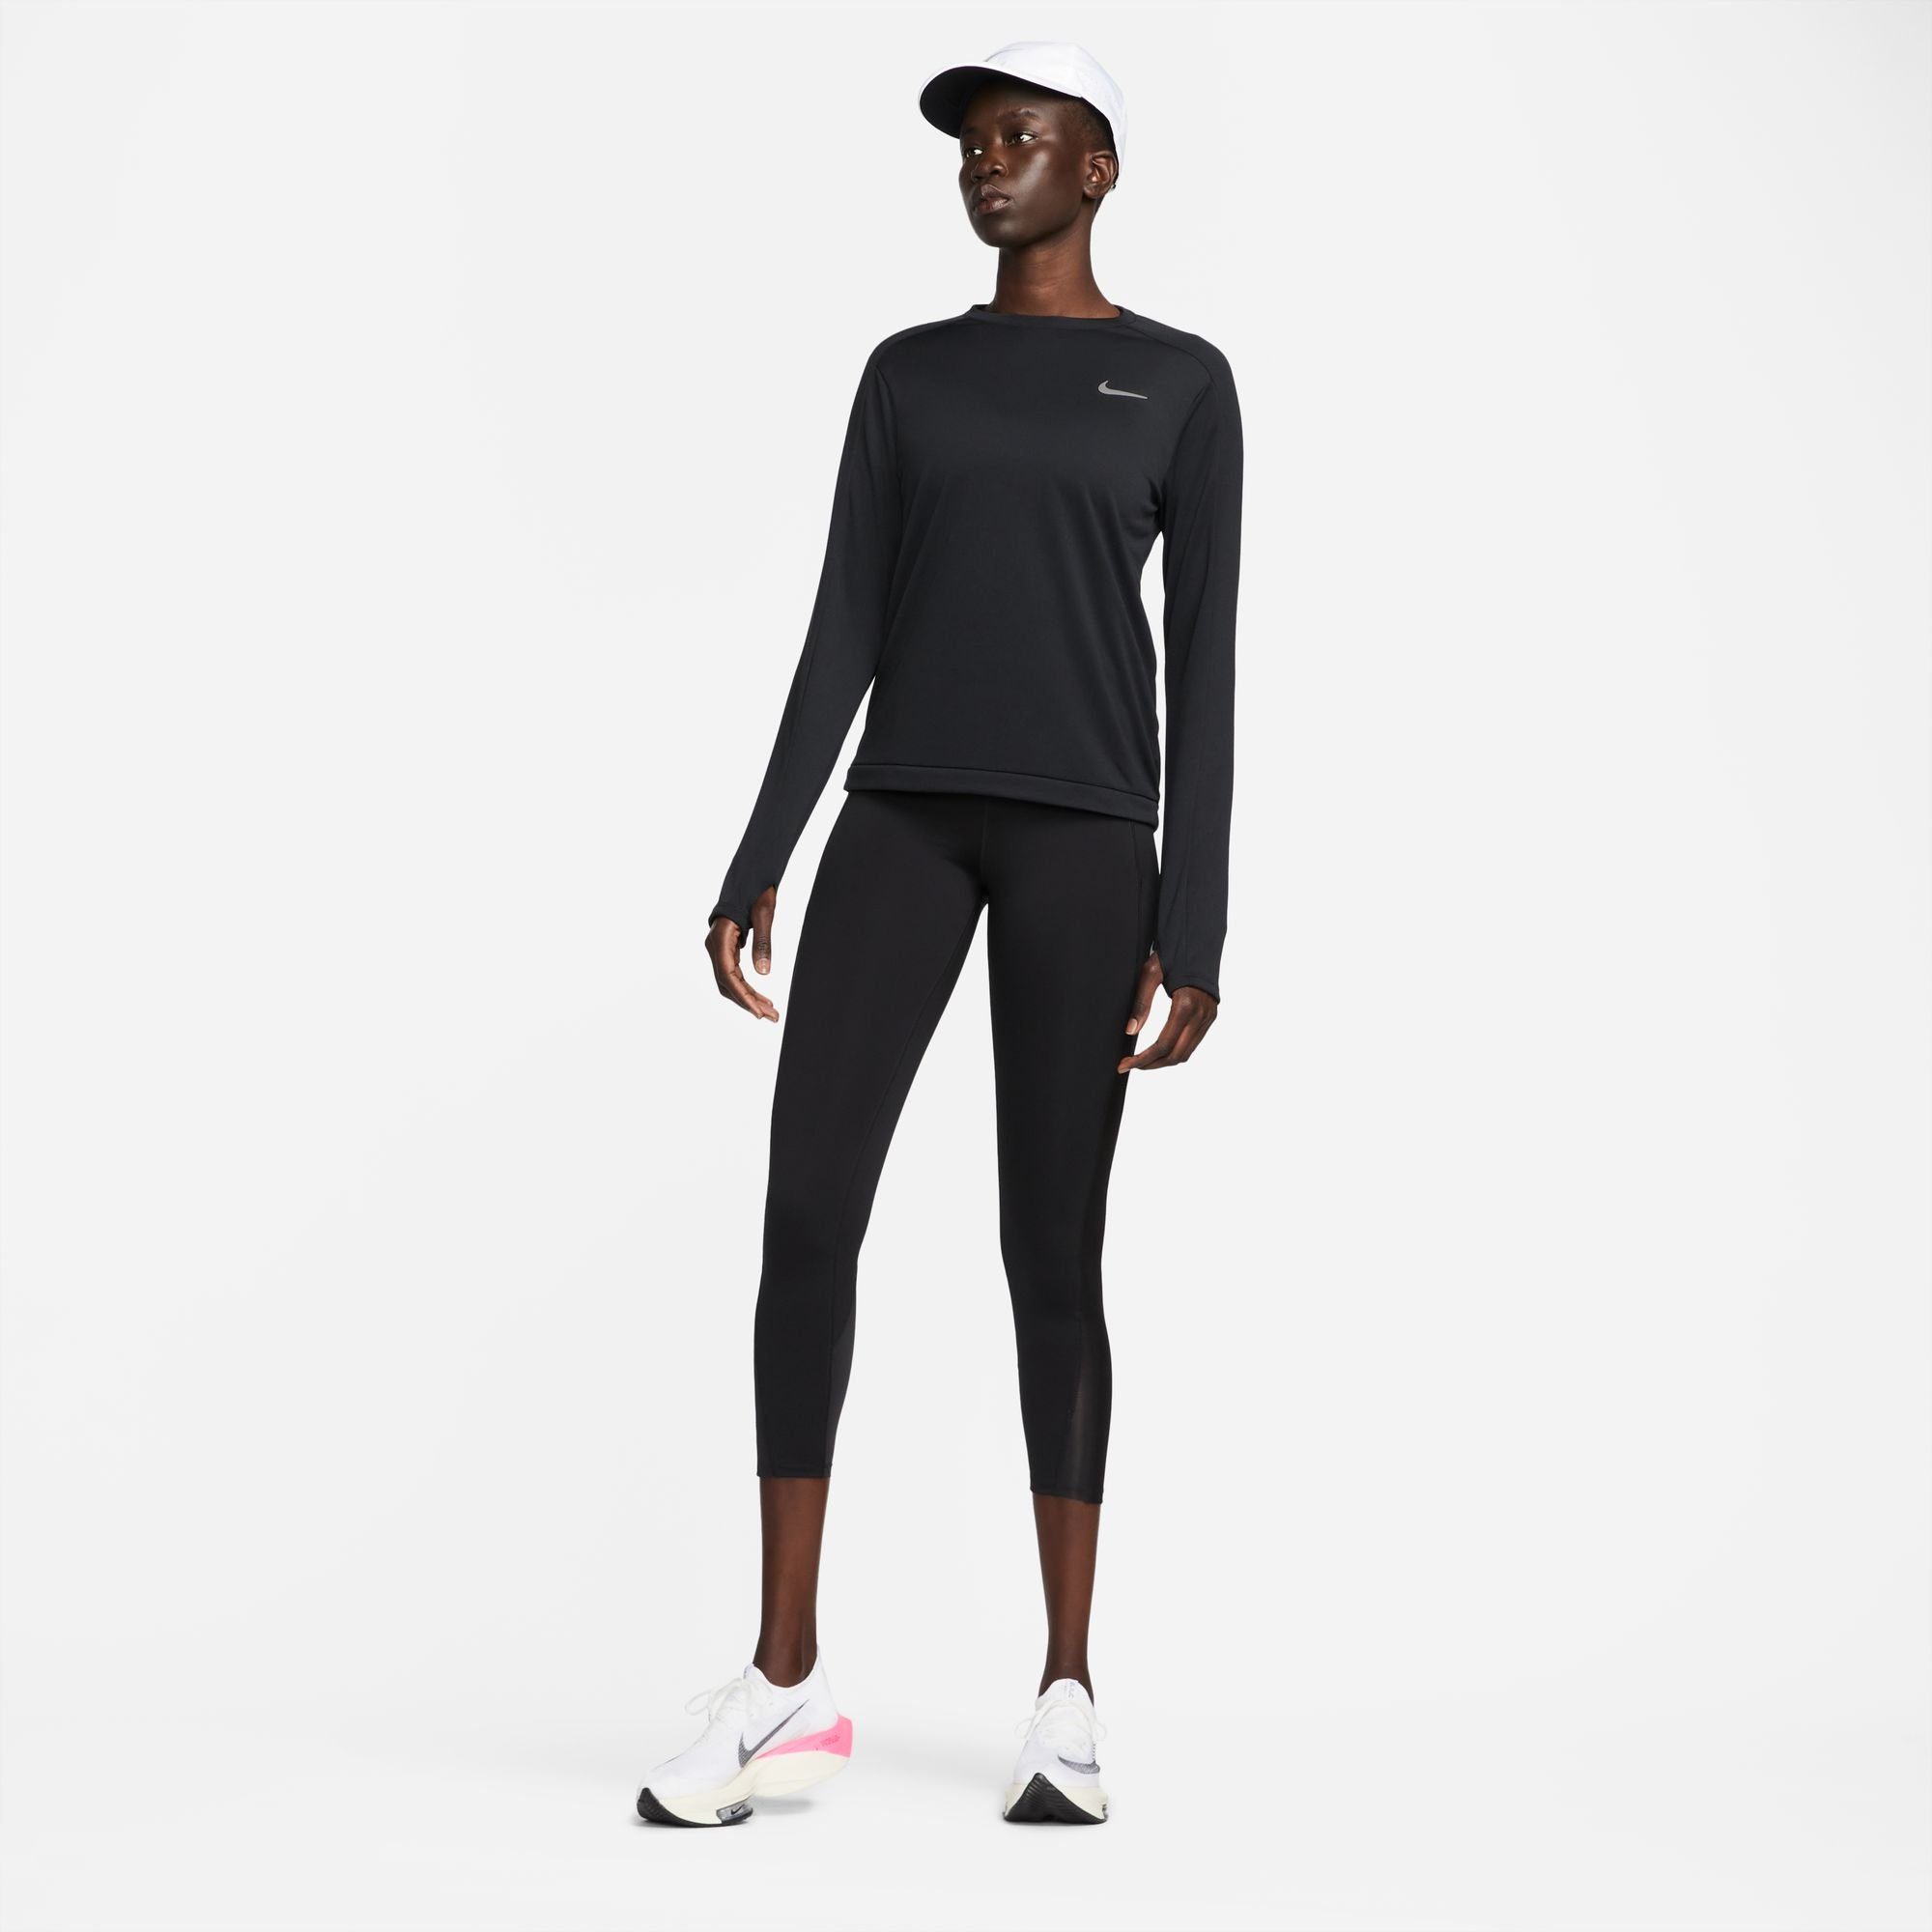 WOMEN'S Nike SILV CREW-NECK Laufshirt DRI-FIT BLACK/REFLECTIVE TOP RUNNING